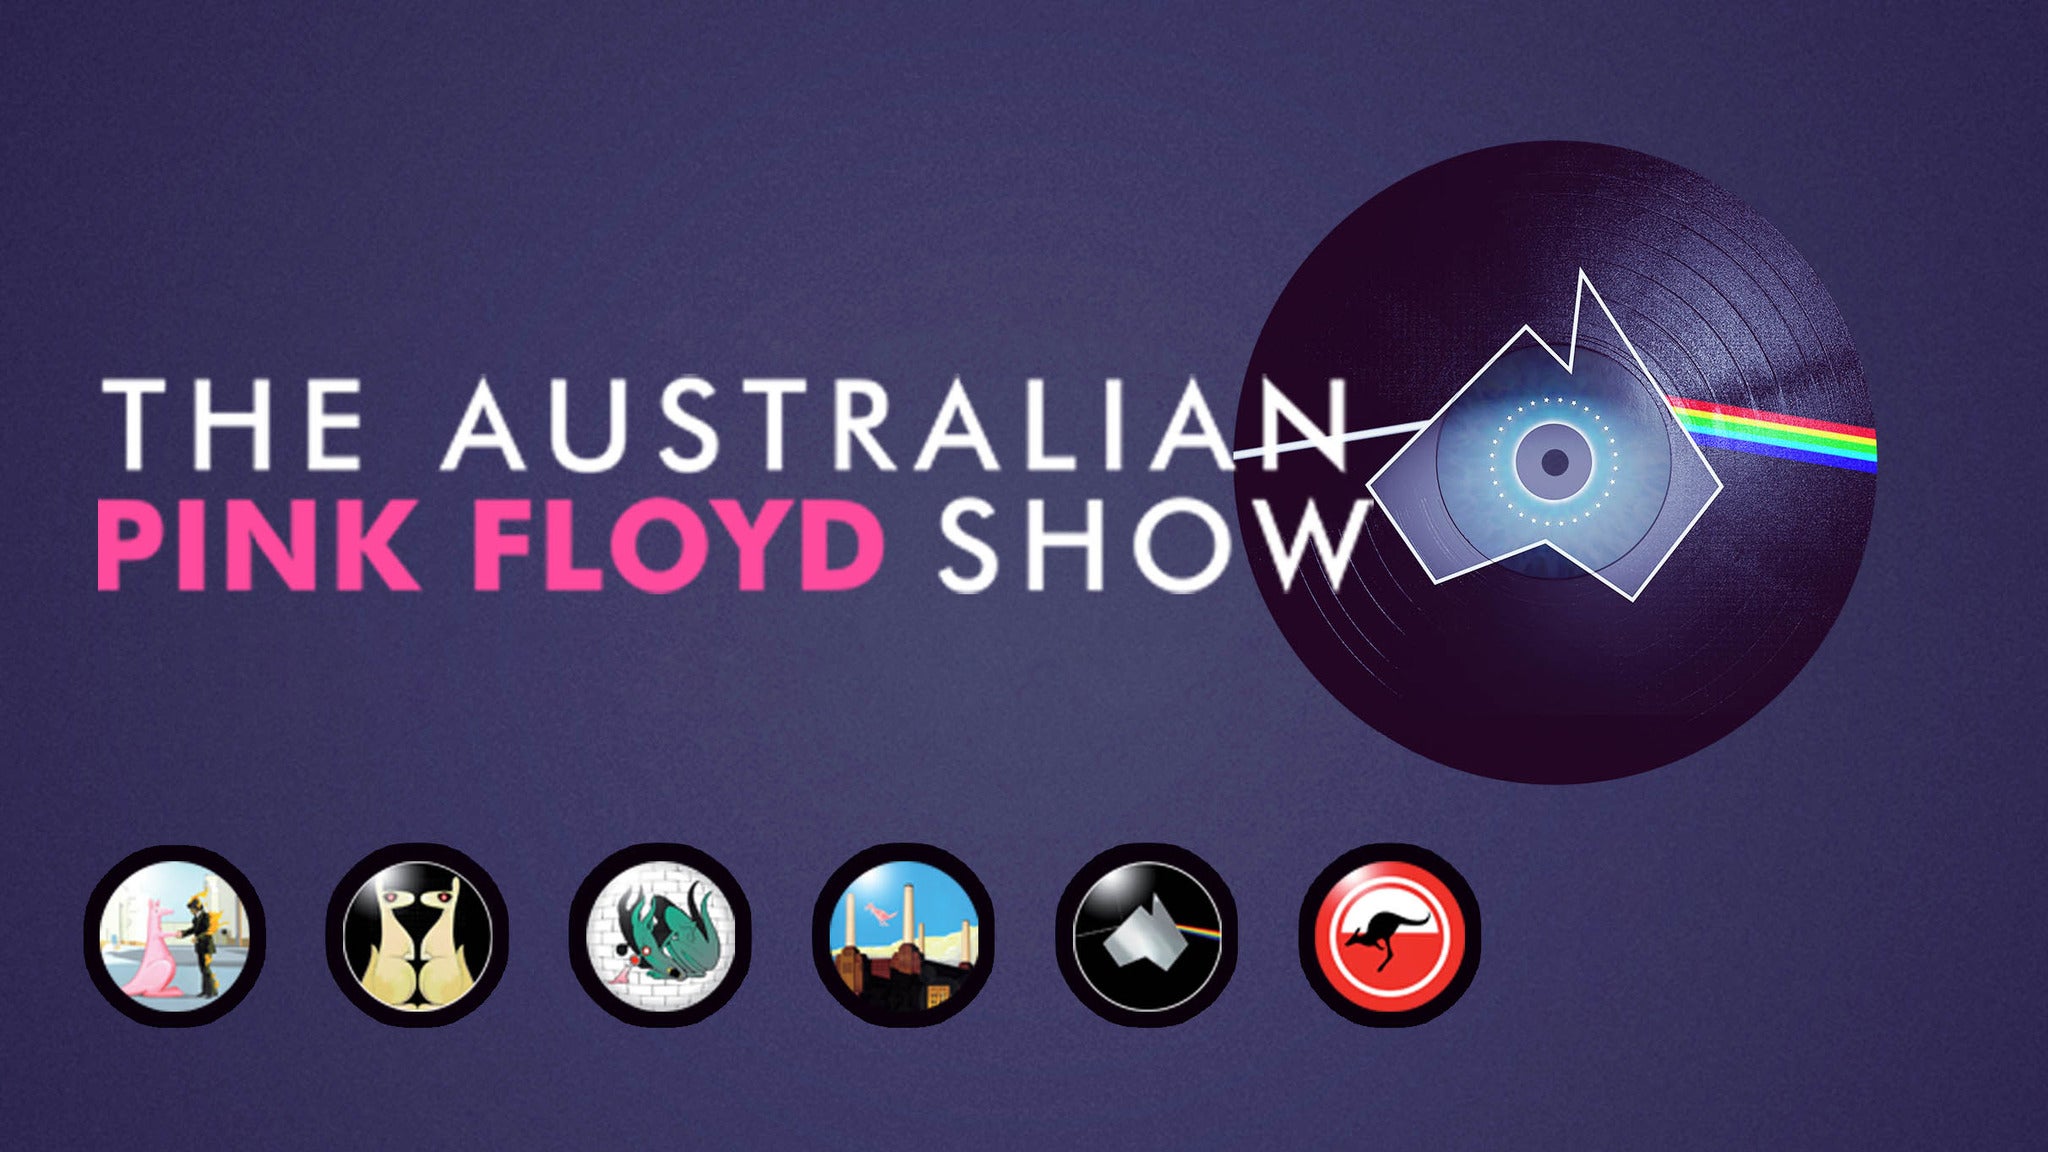 The Australian Pink Floyd Show at Hard Rock Live Orlando - Orlando, FL 32819